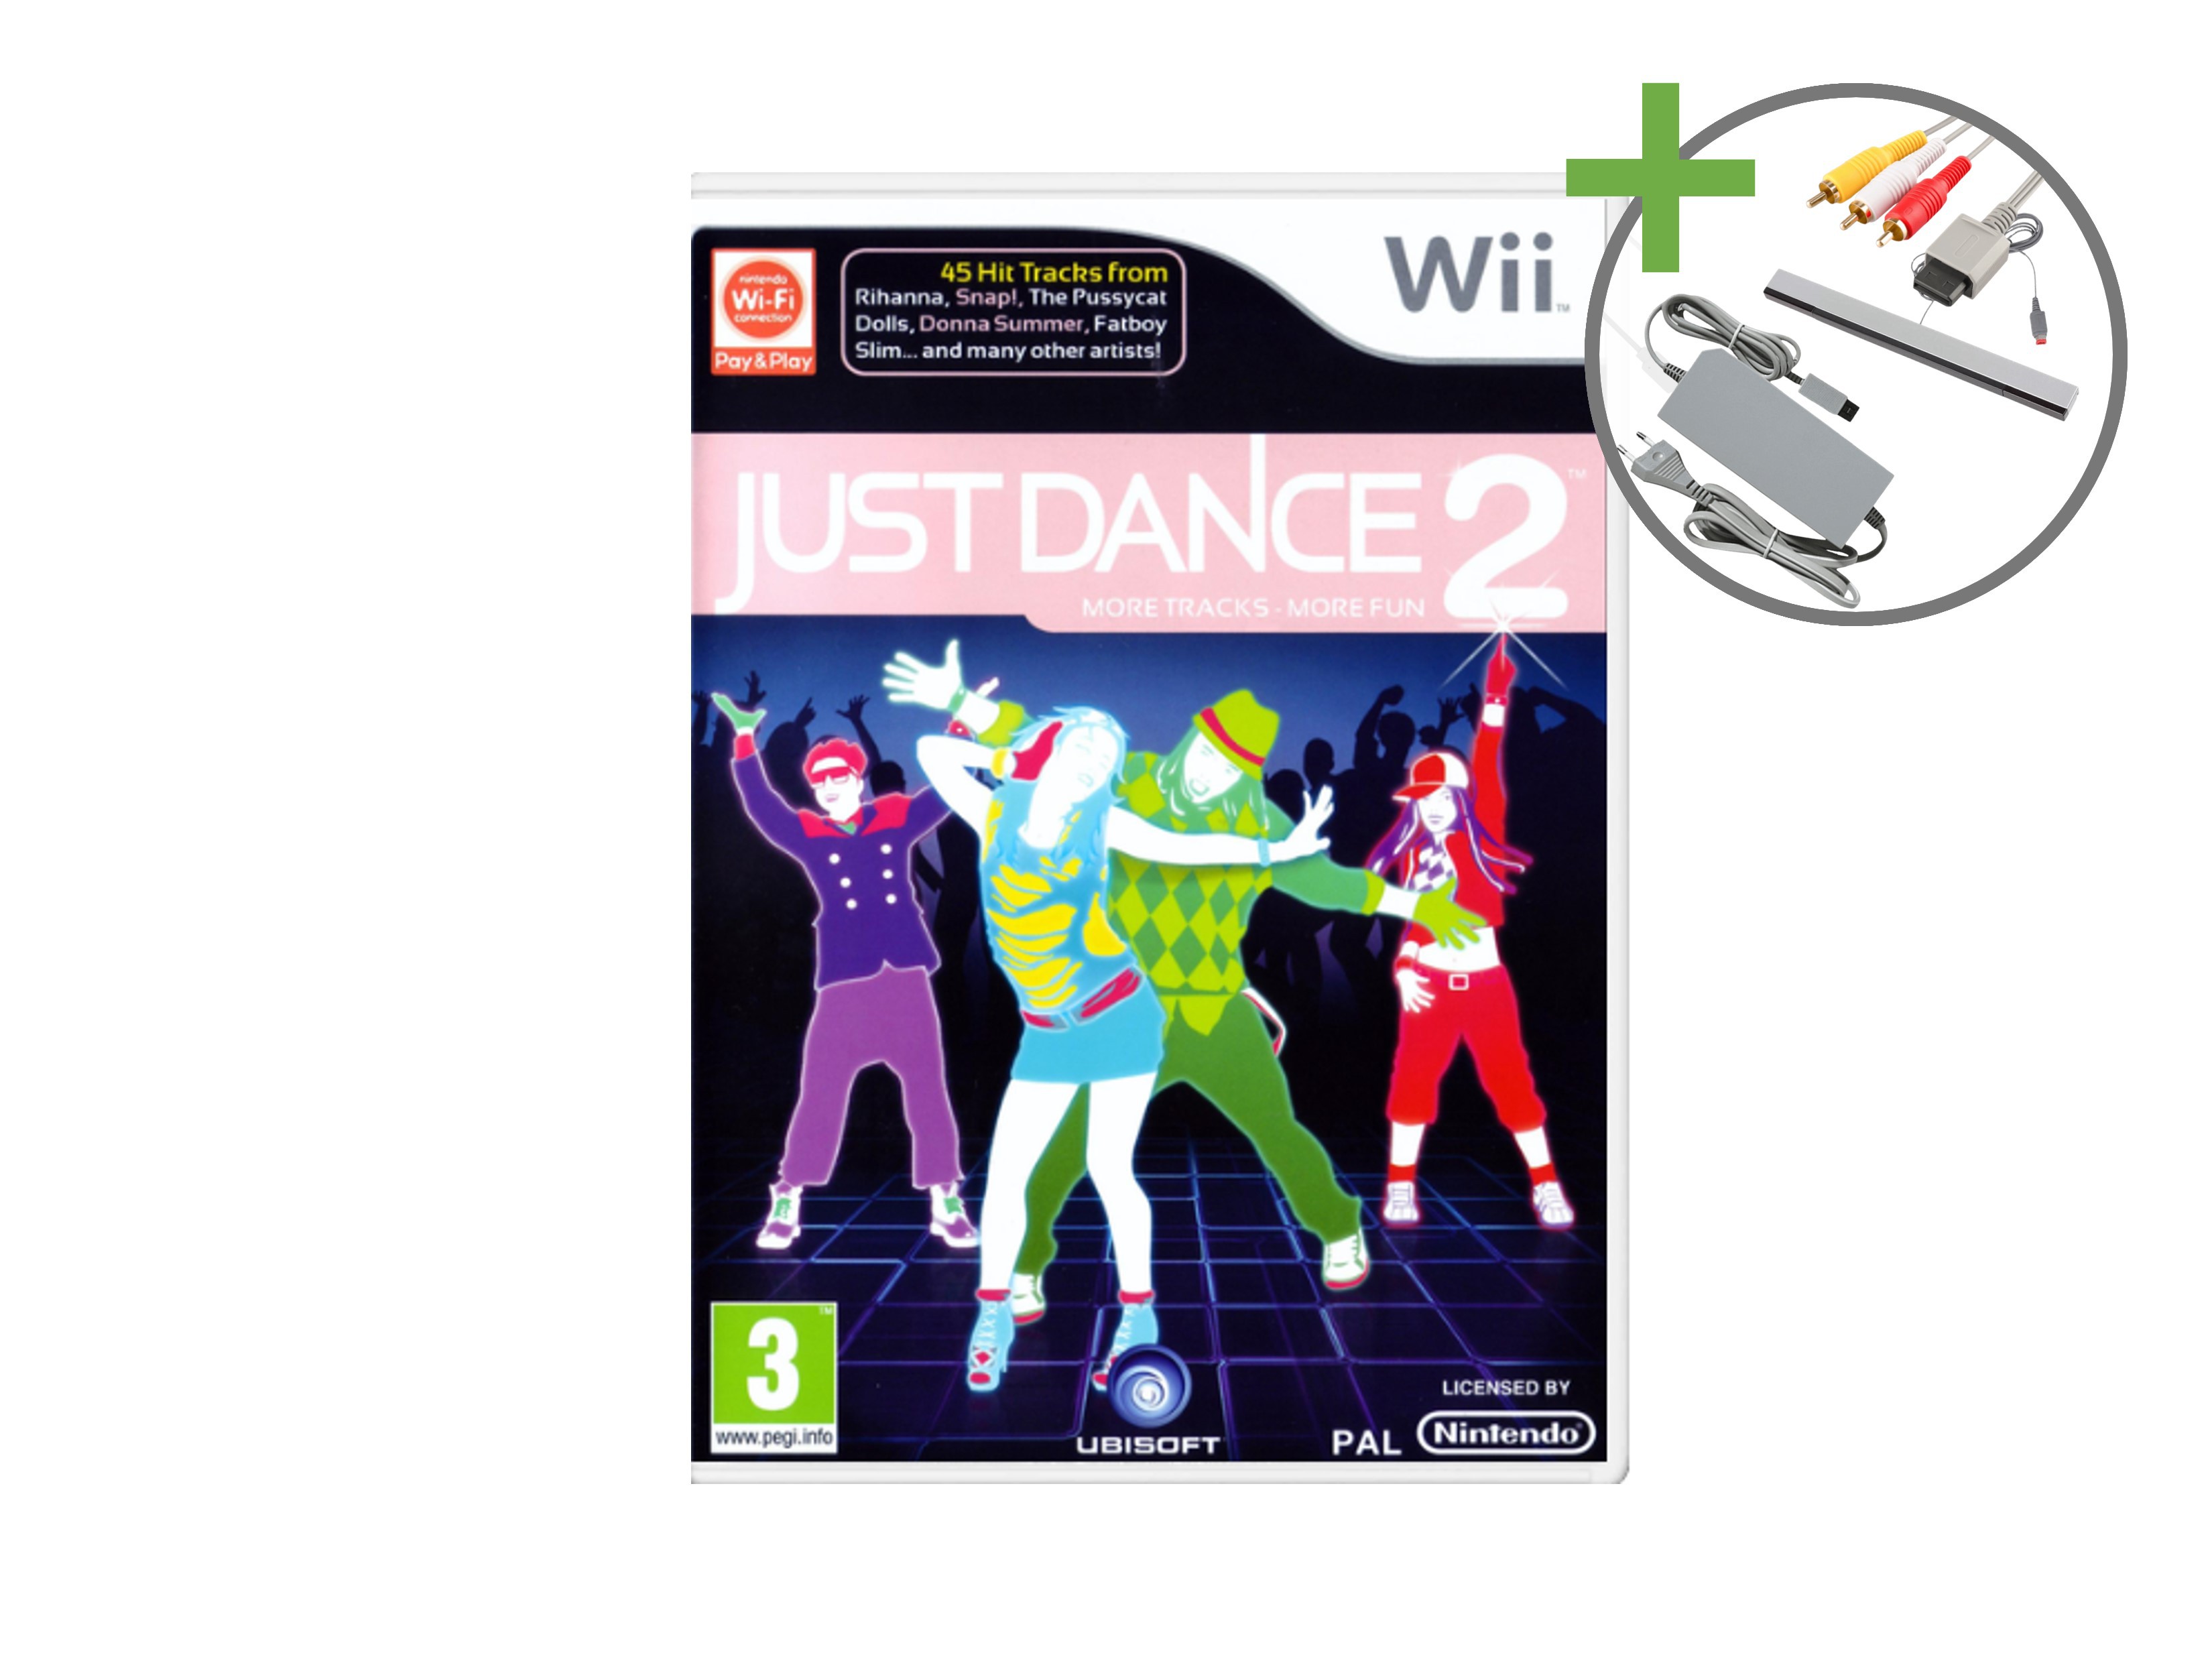 Nintendo Wii Starter Pack - Just Dance 2 Edition - Wii Hardware - 4